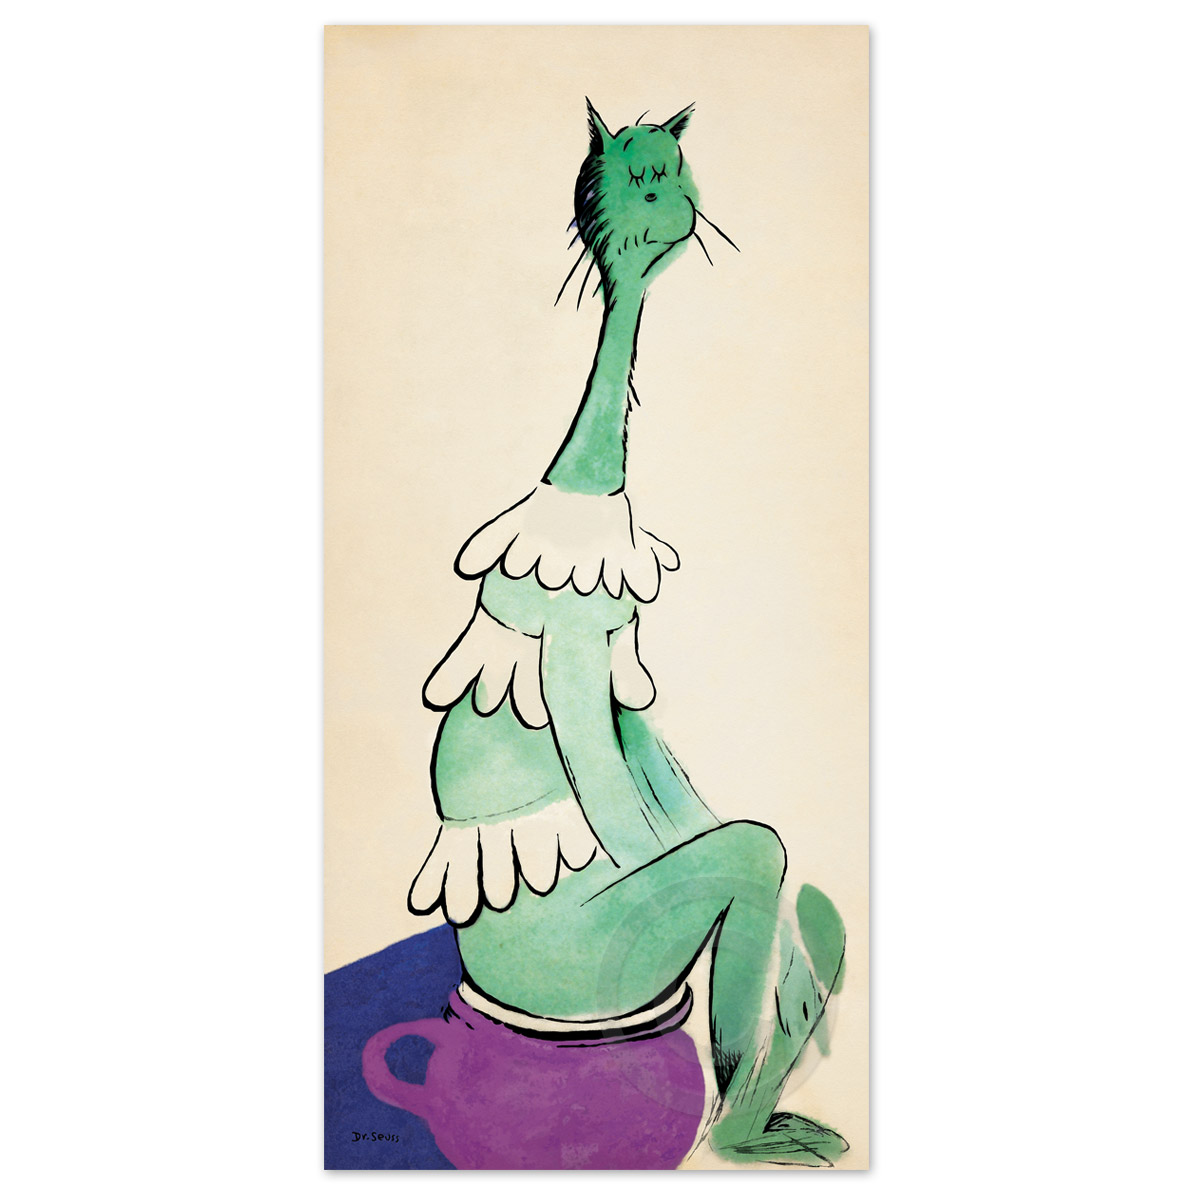 Greenish Cat on Pinkish Pot by Dr. Seuss